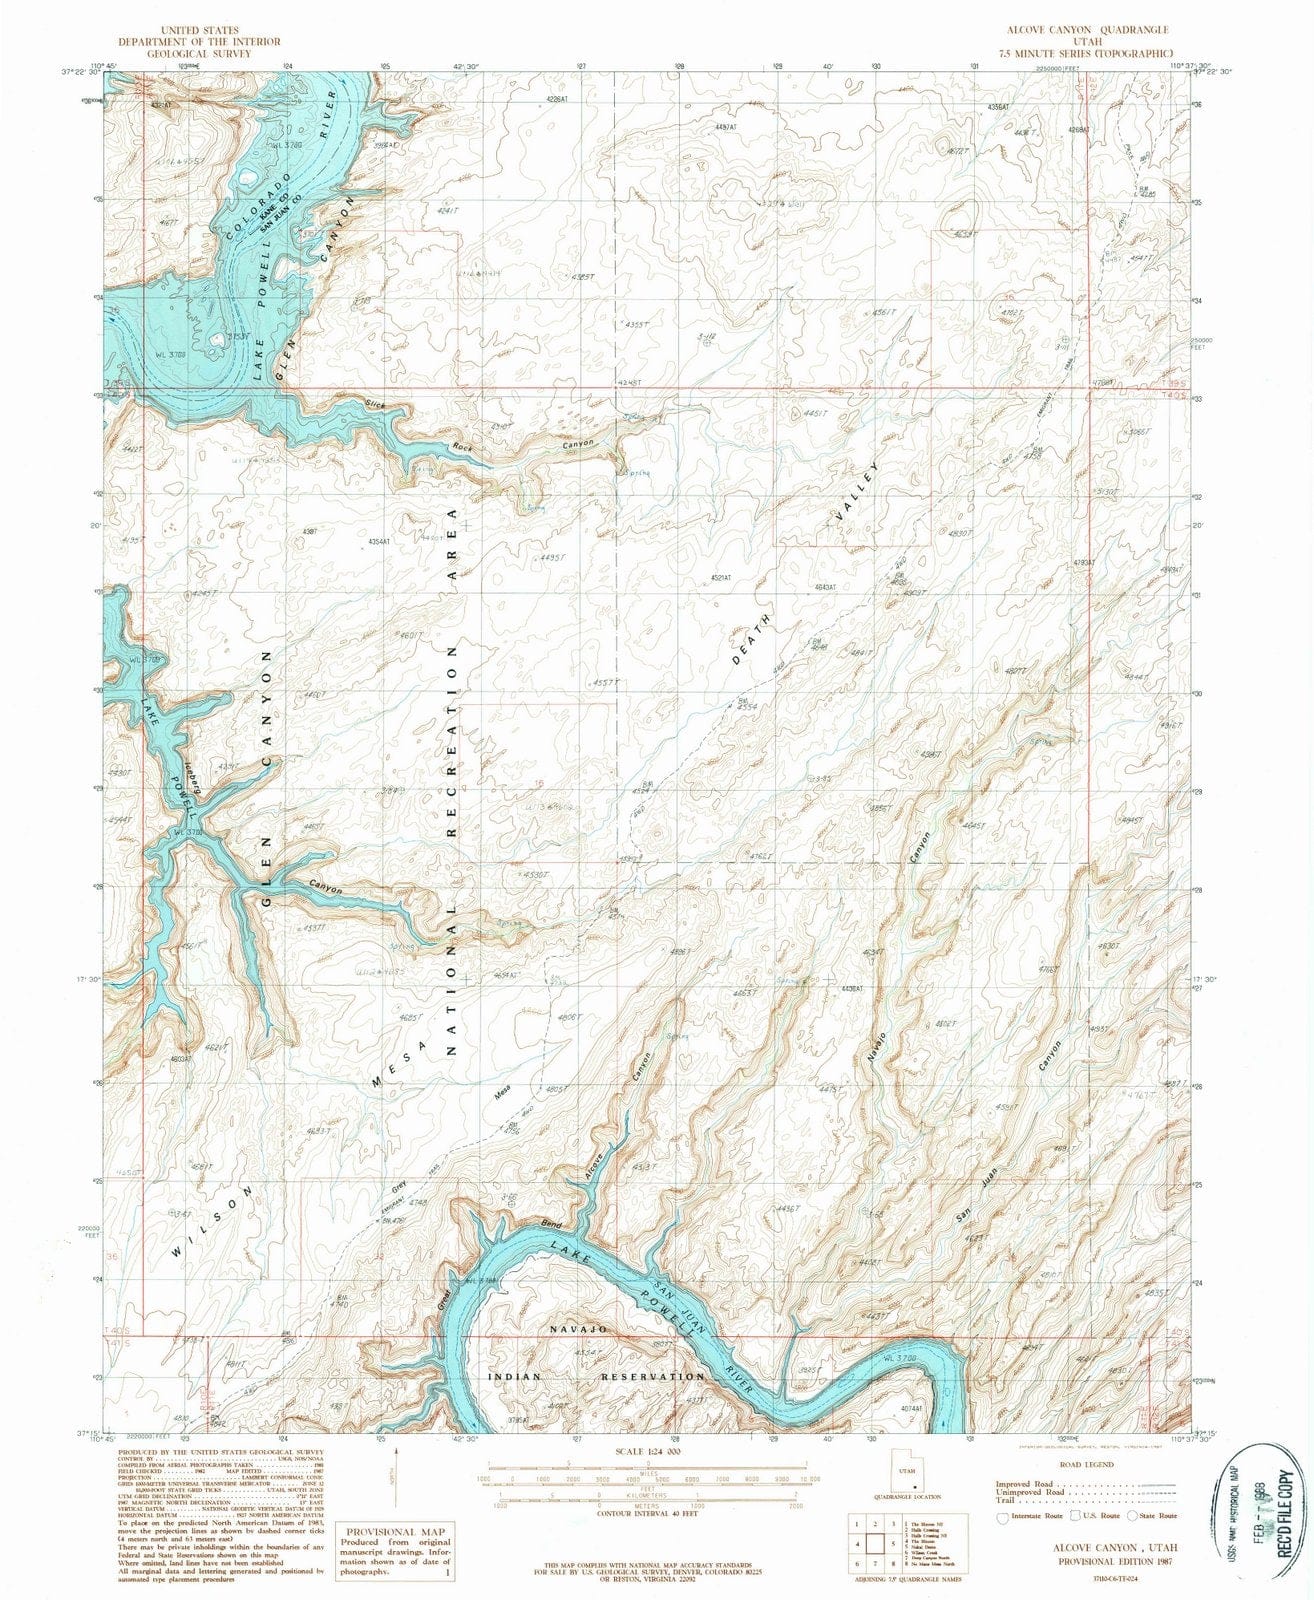 1987 Alcove Canyon, UT - Utah - USGS Topographic Map